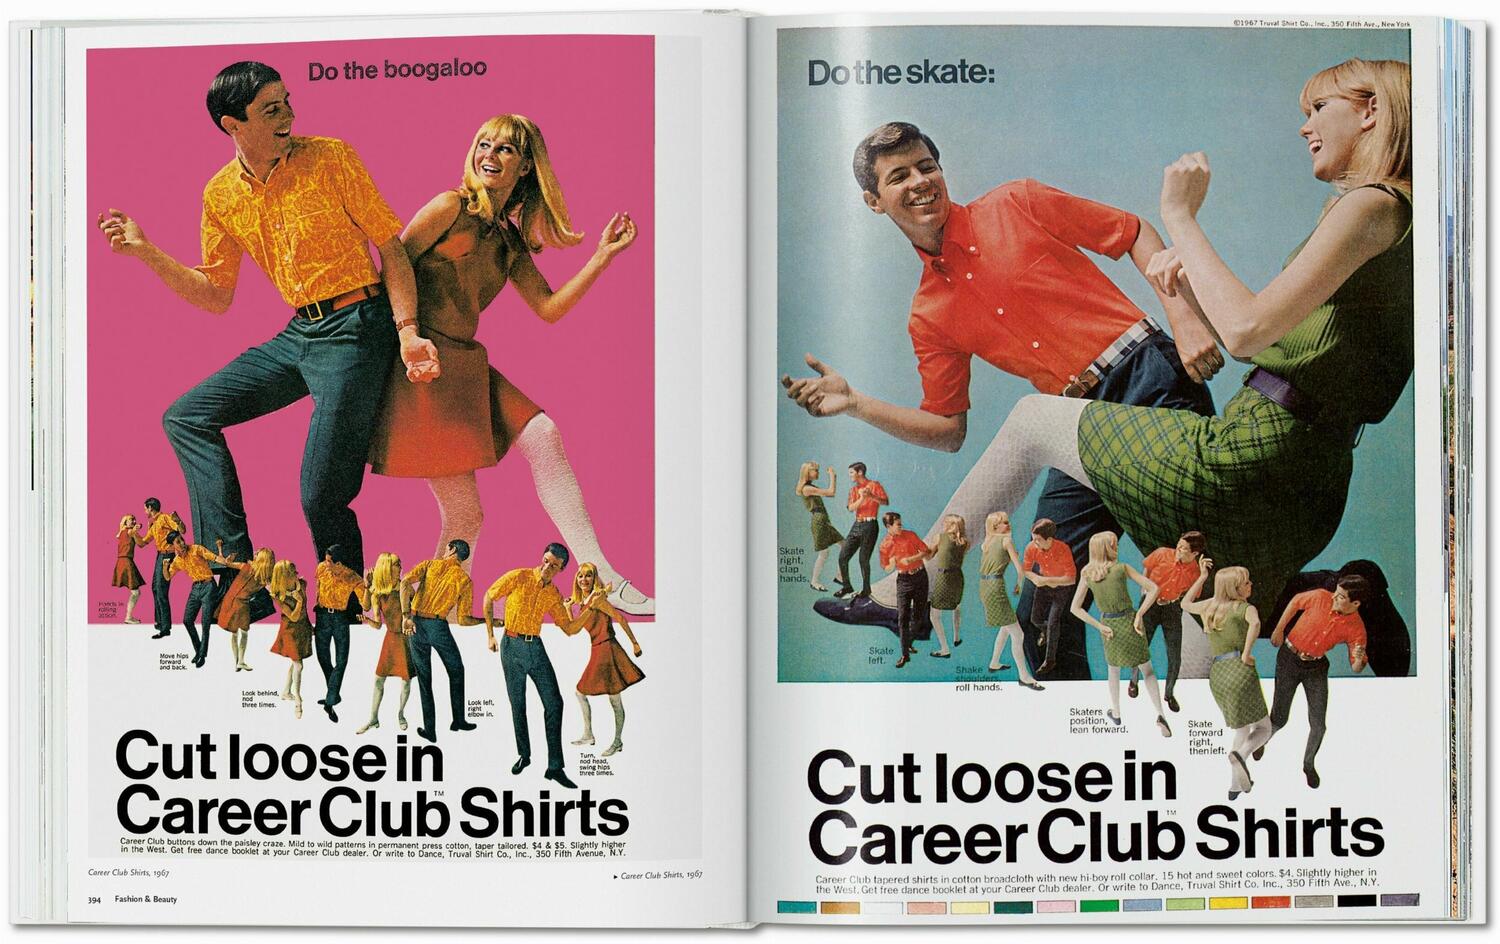 Bild: 9783836588591 | All-American Ads of the 60s | Steven Heller | Buch | GER, Hardcover